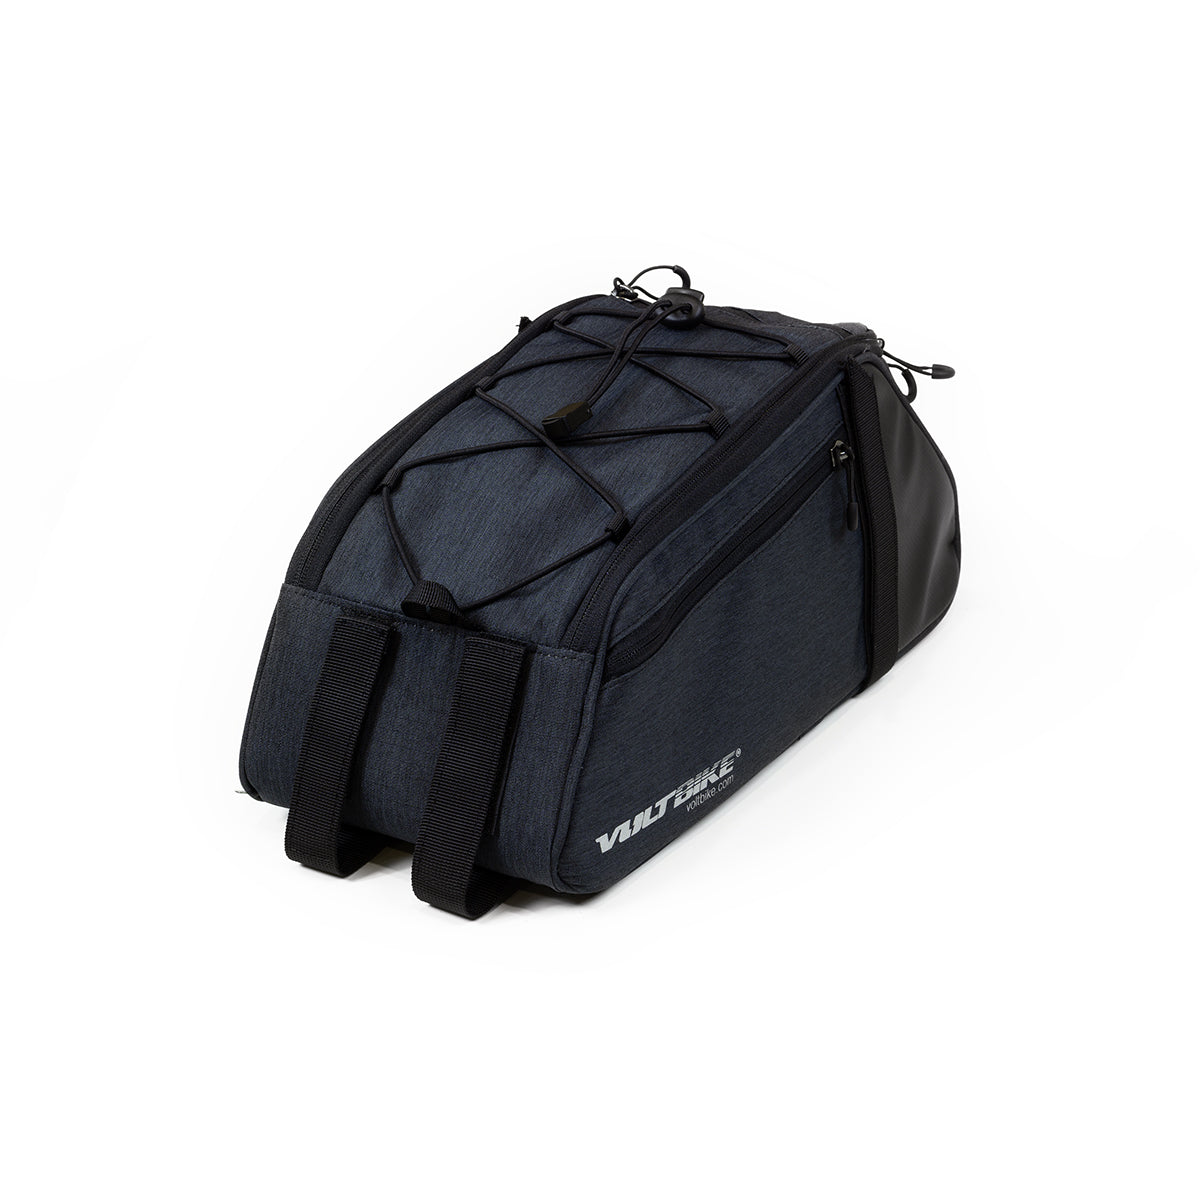 ARCHIVE BAGS* rack bag | Bicycle bag, Bike bag, Bags